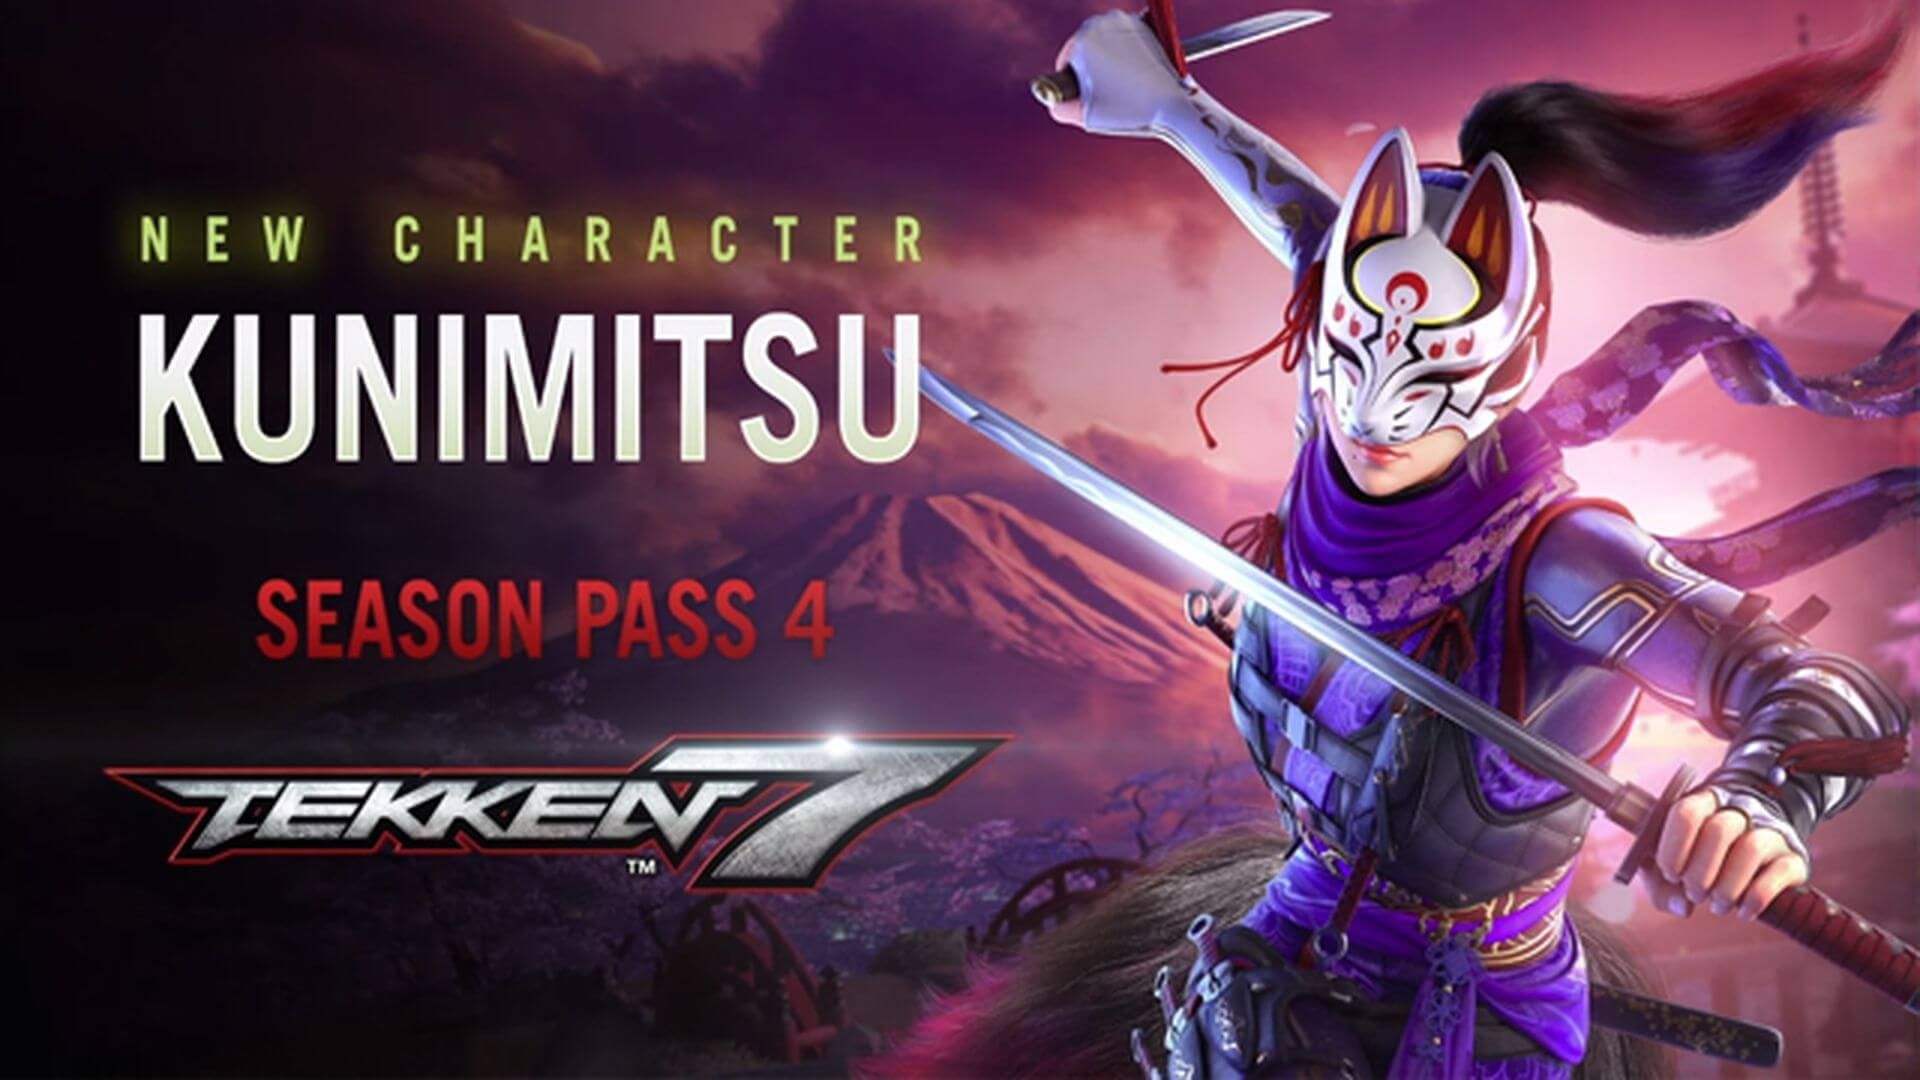 The new character in Tekken 7 will be Kunimitsu